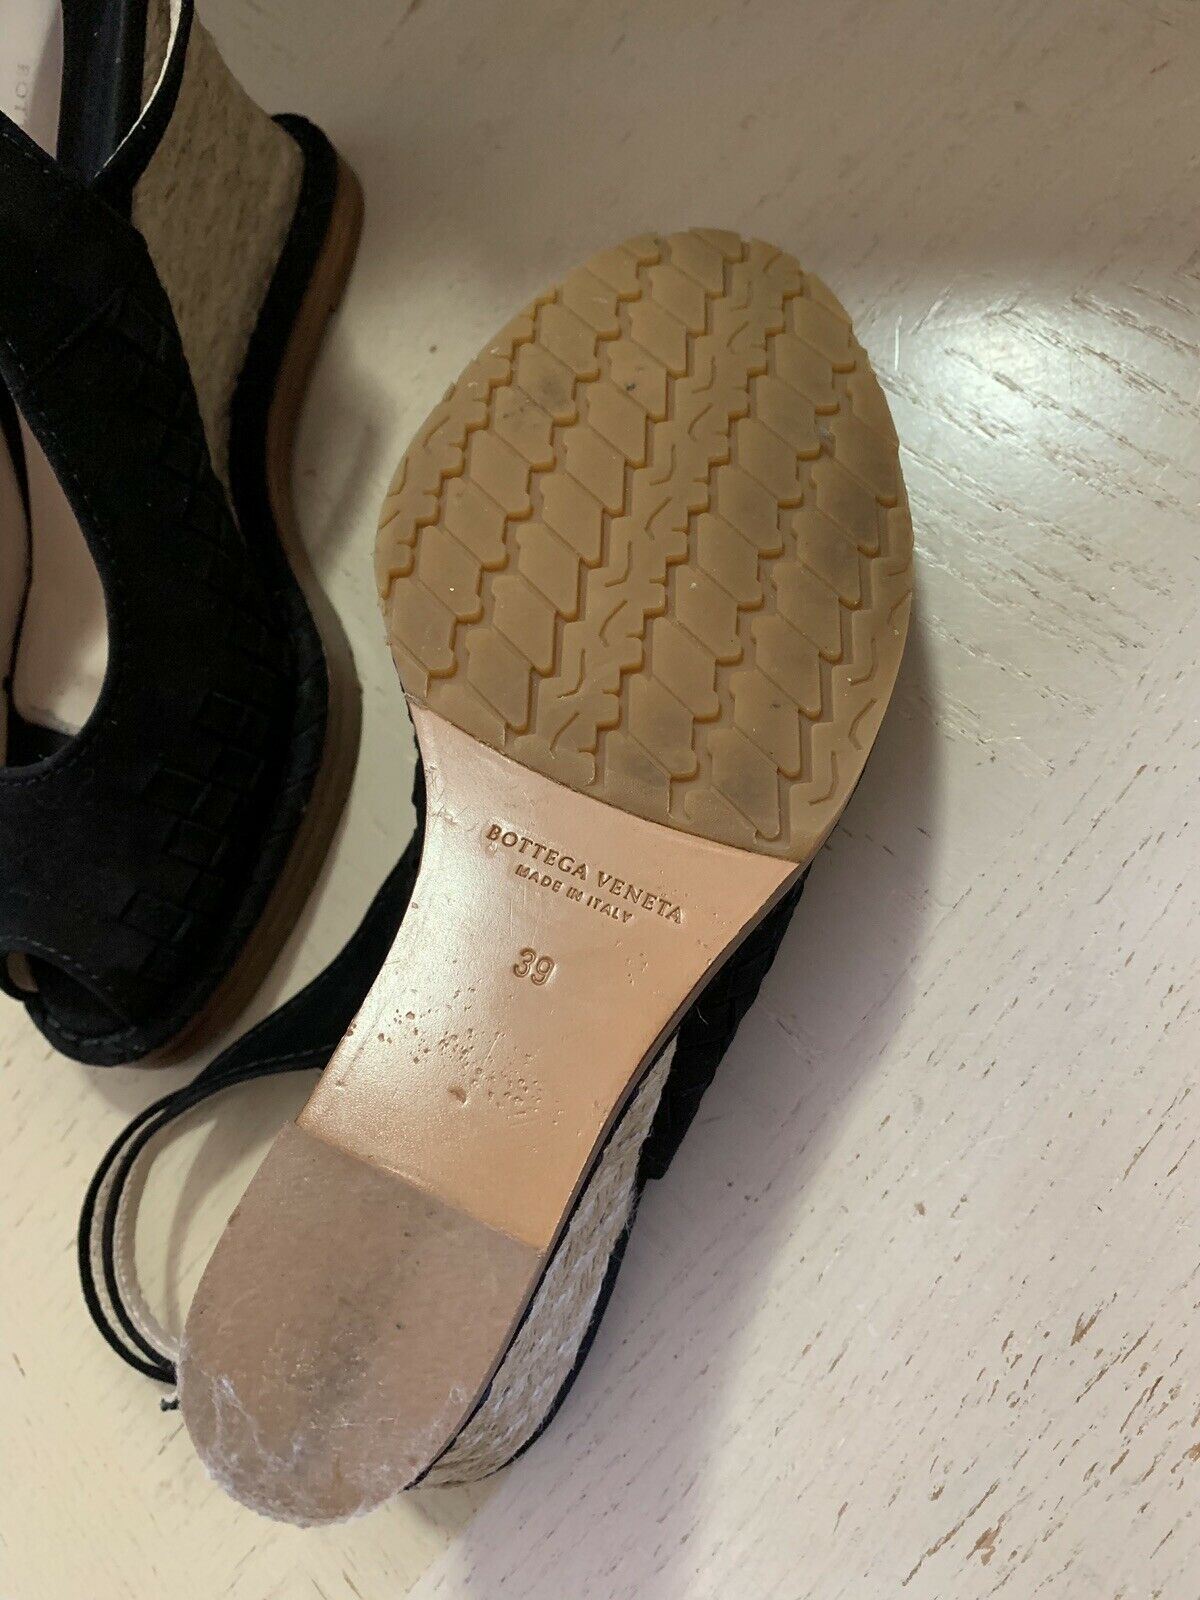 $990 Bottega Veneta Women’s Suede Shoes Sandal Black 9 US ( 39 Eu ) Italy